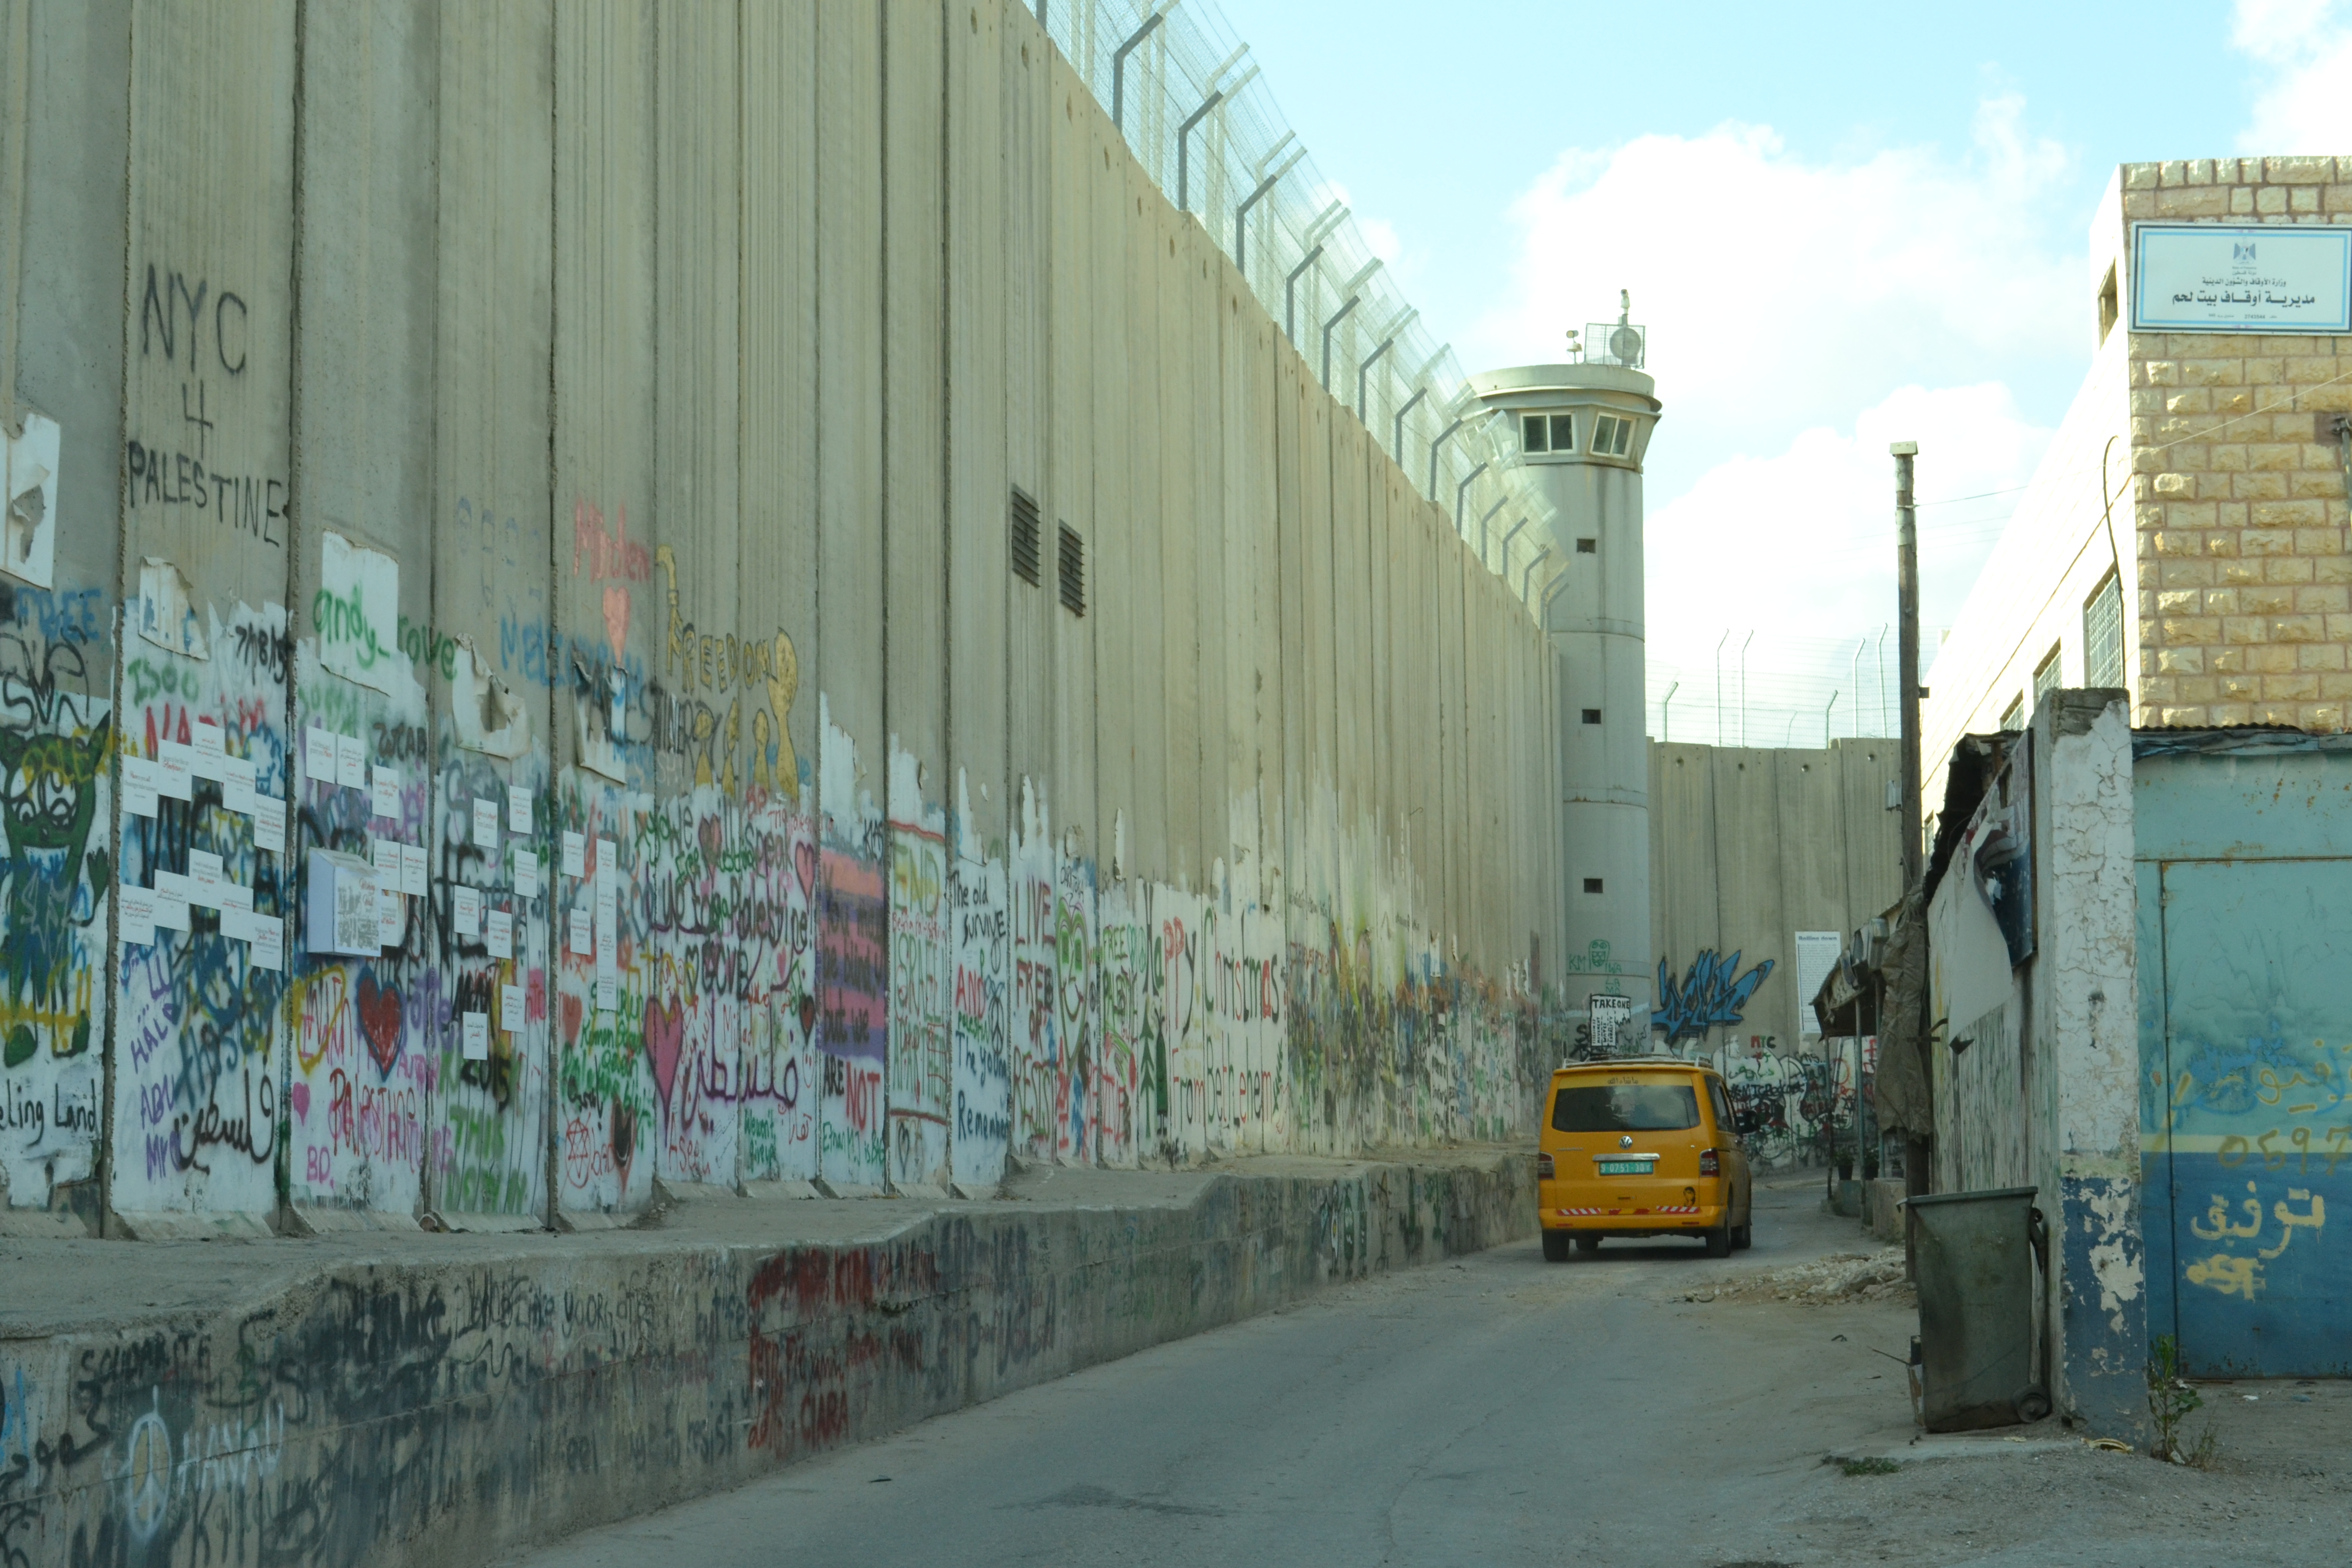 Israel's Wall, Beit Jala, occupied Palestine (David Kattenburg)